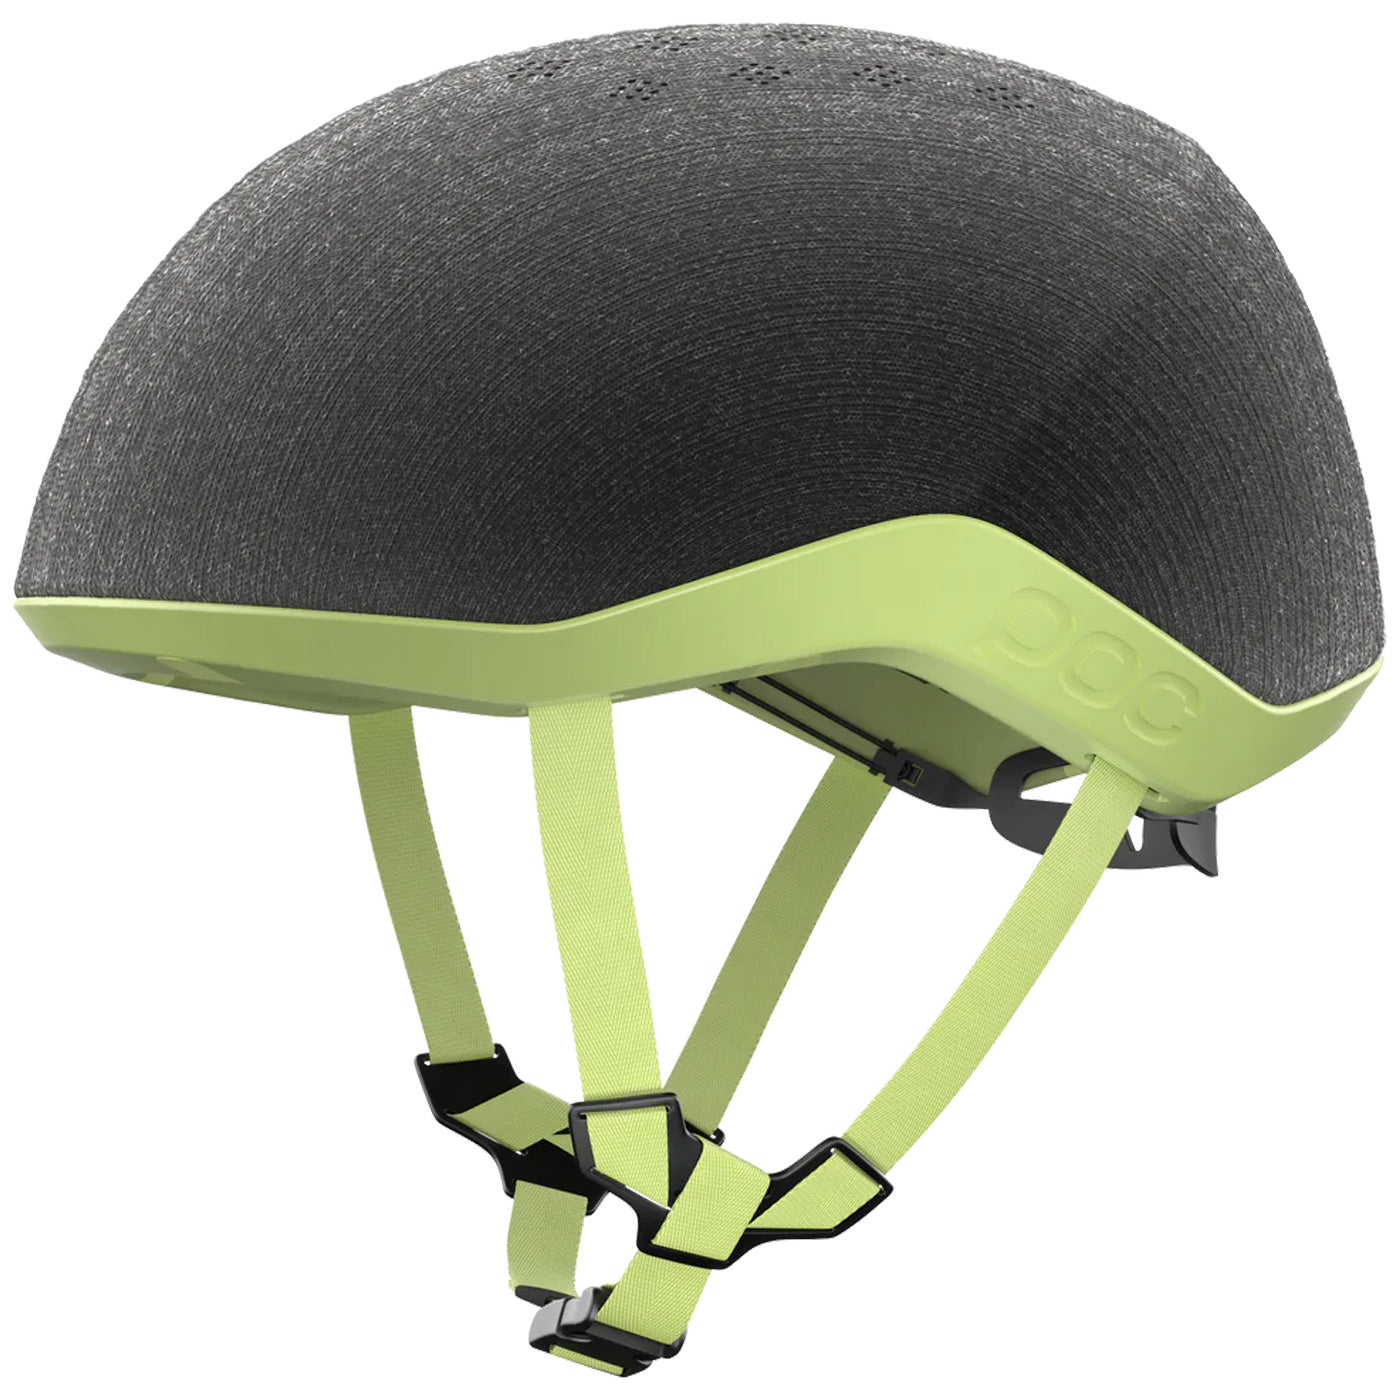 Poc Myelin helmet - Grey green